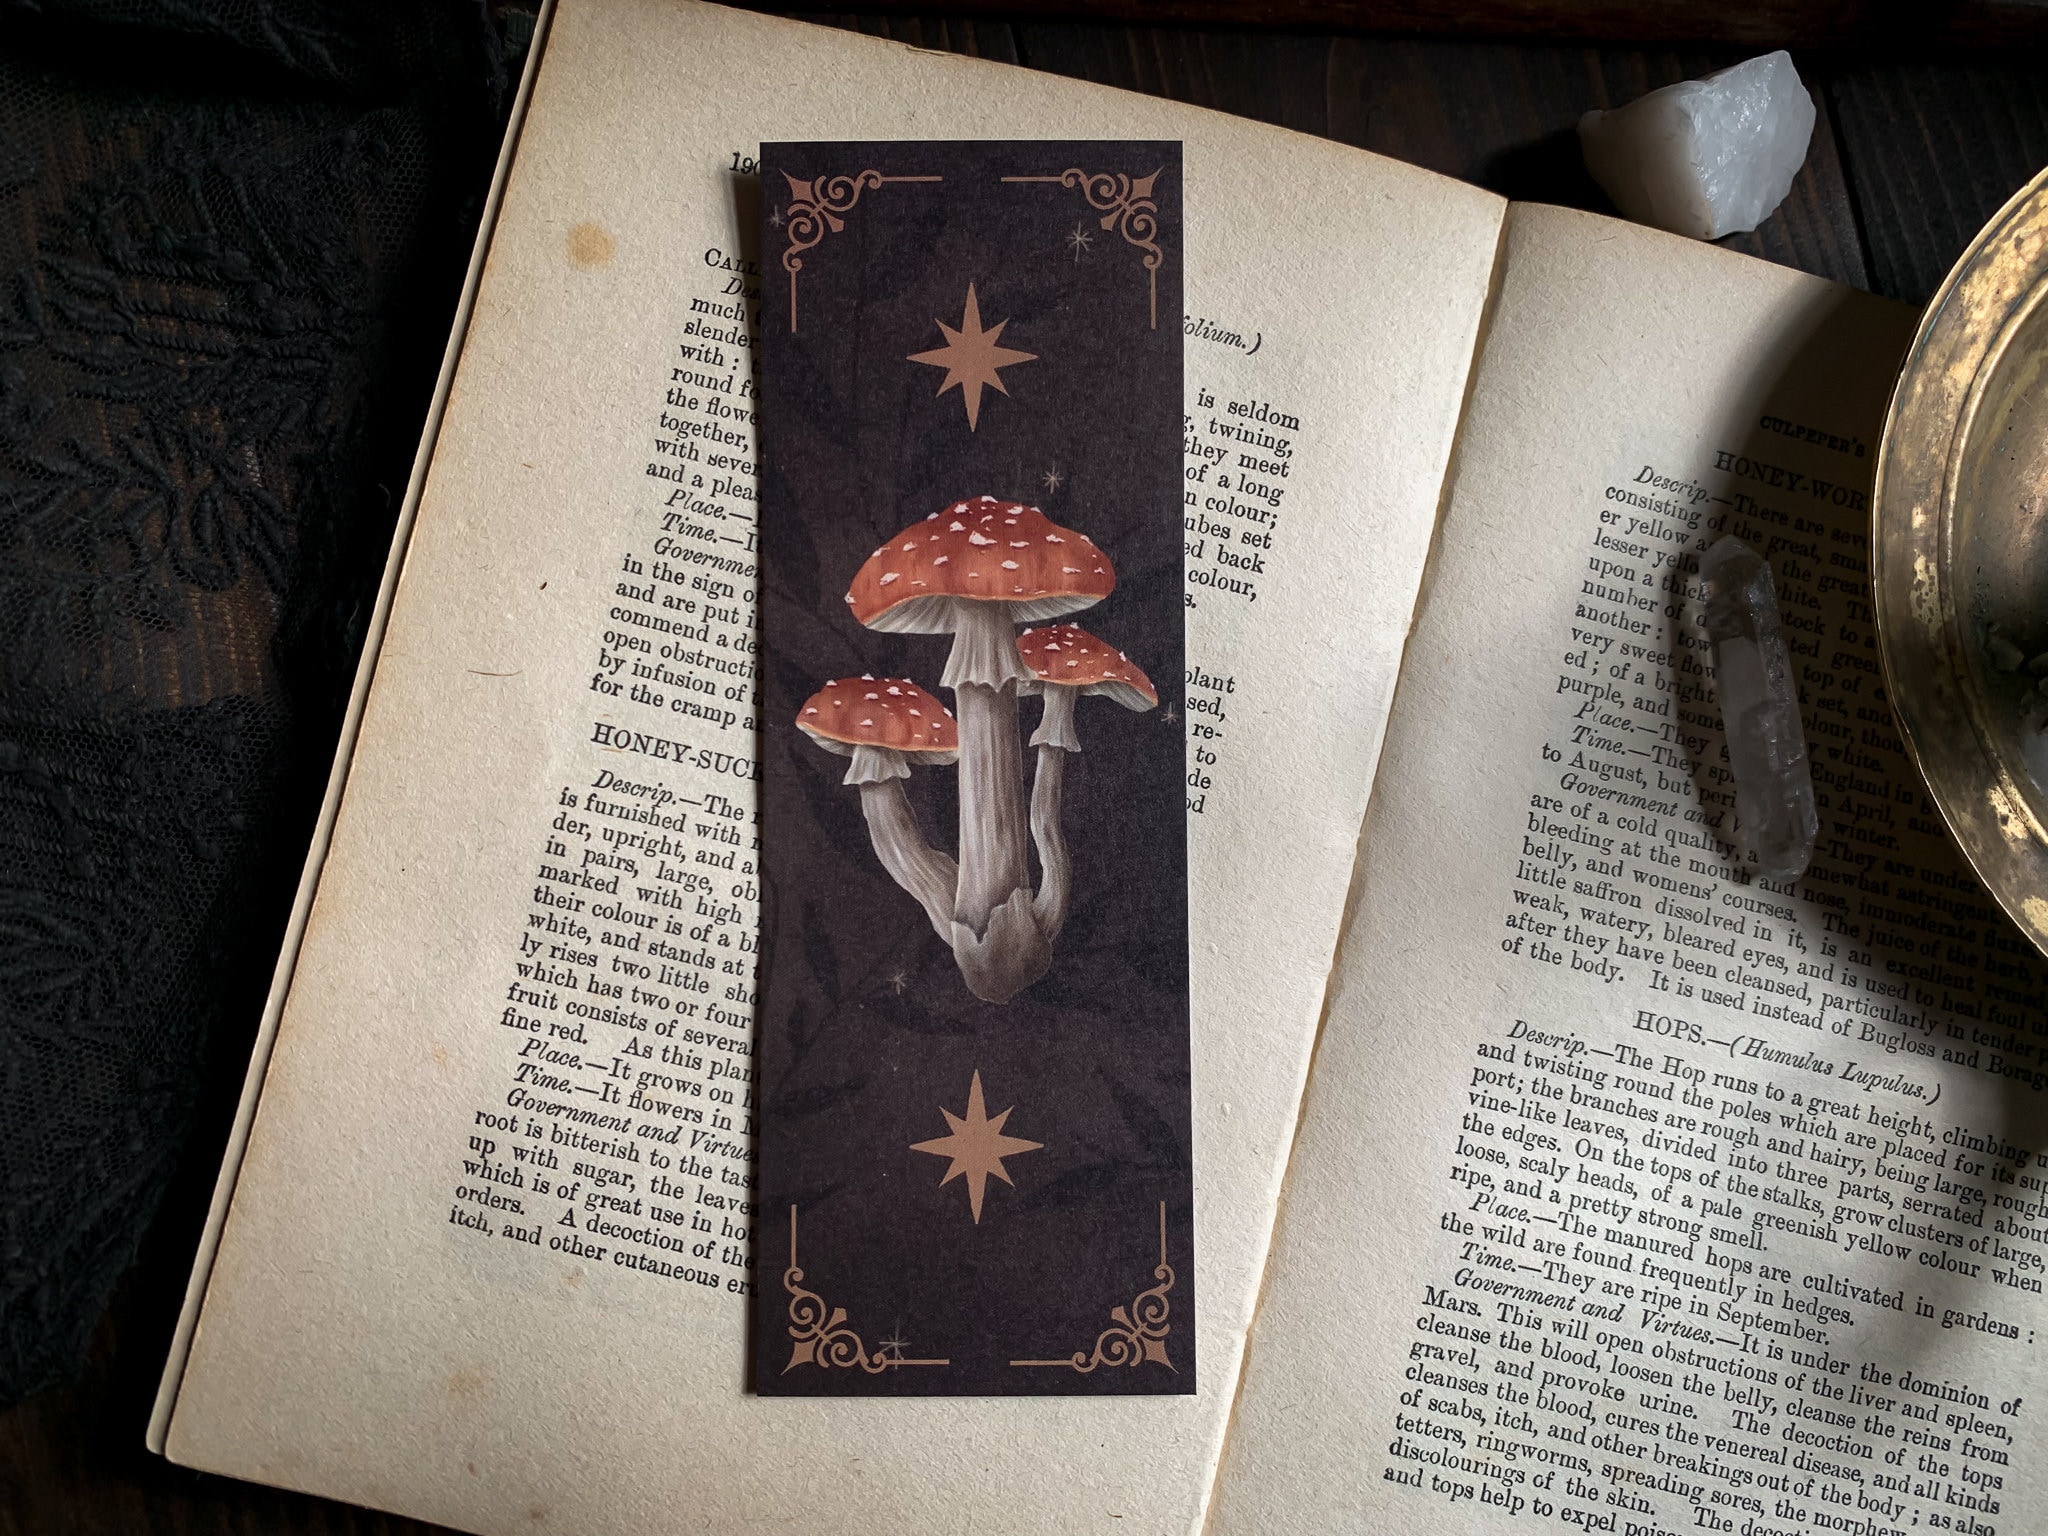 Mushroom Bookmark – ban.do